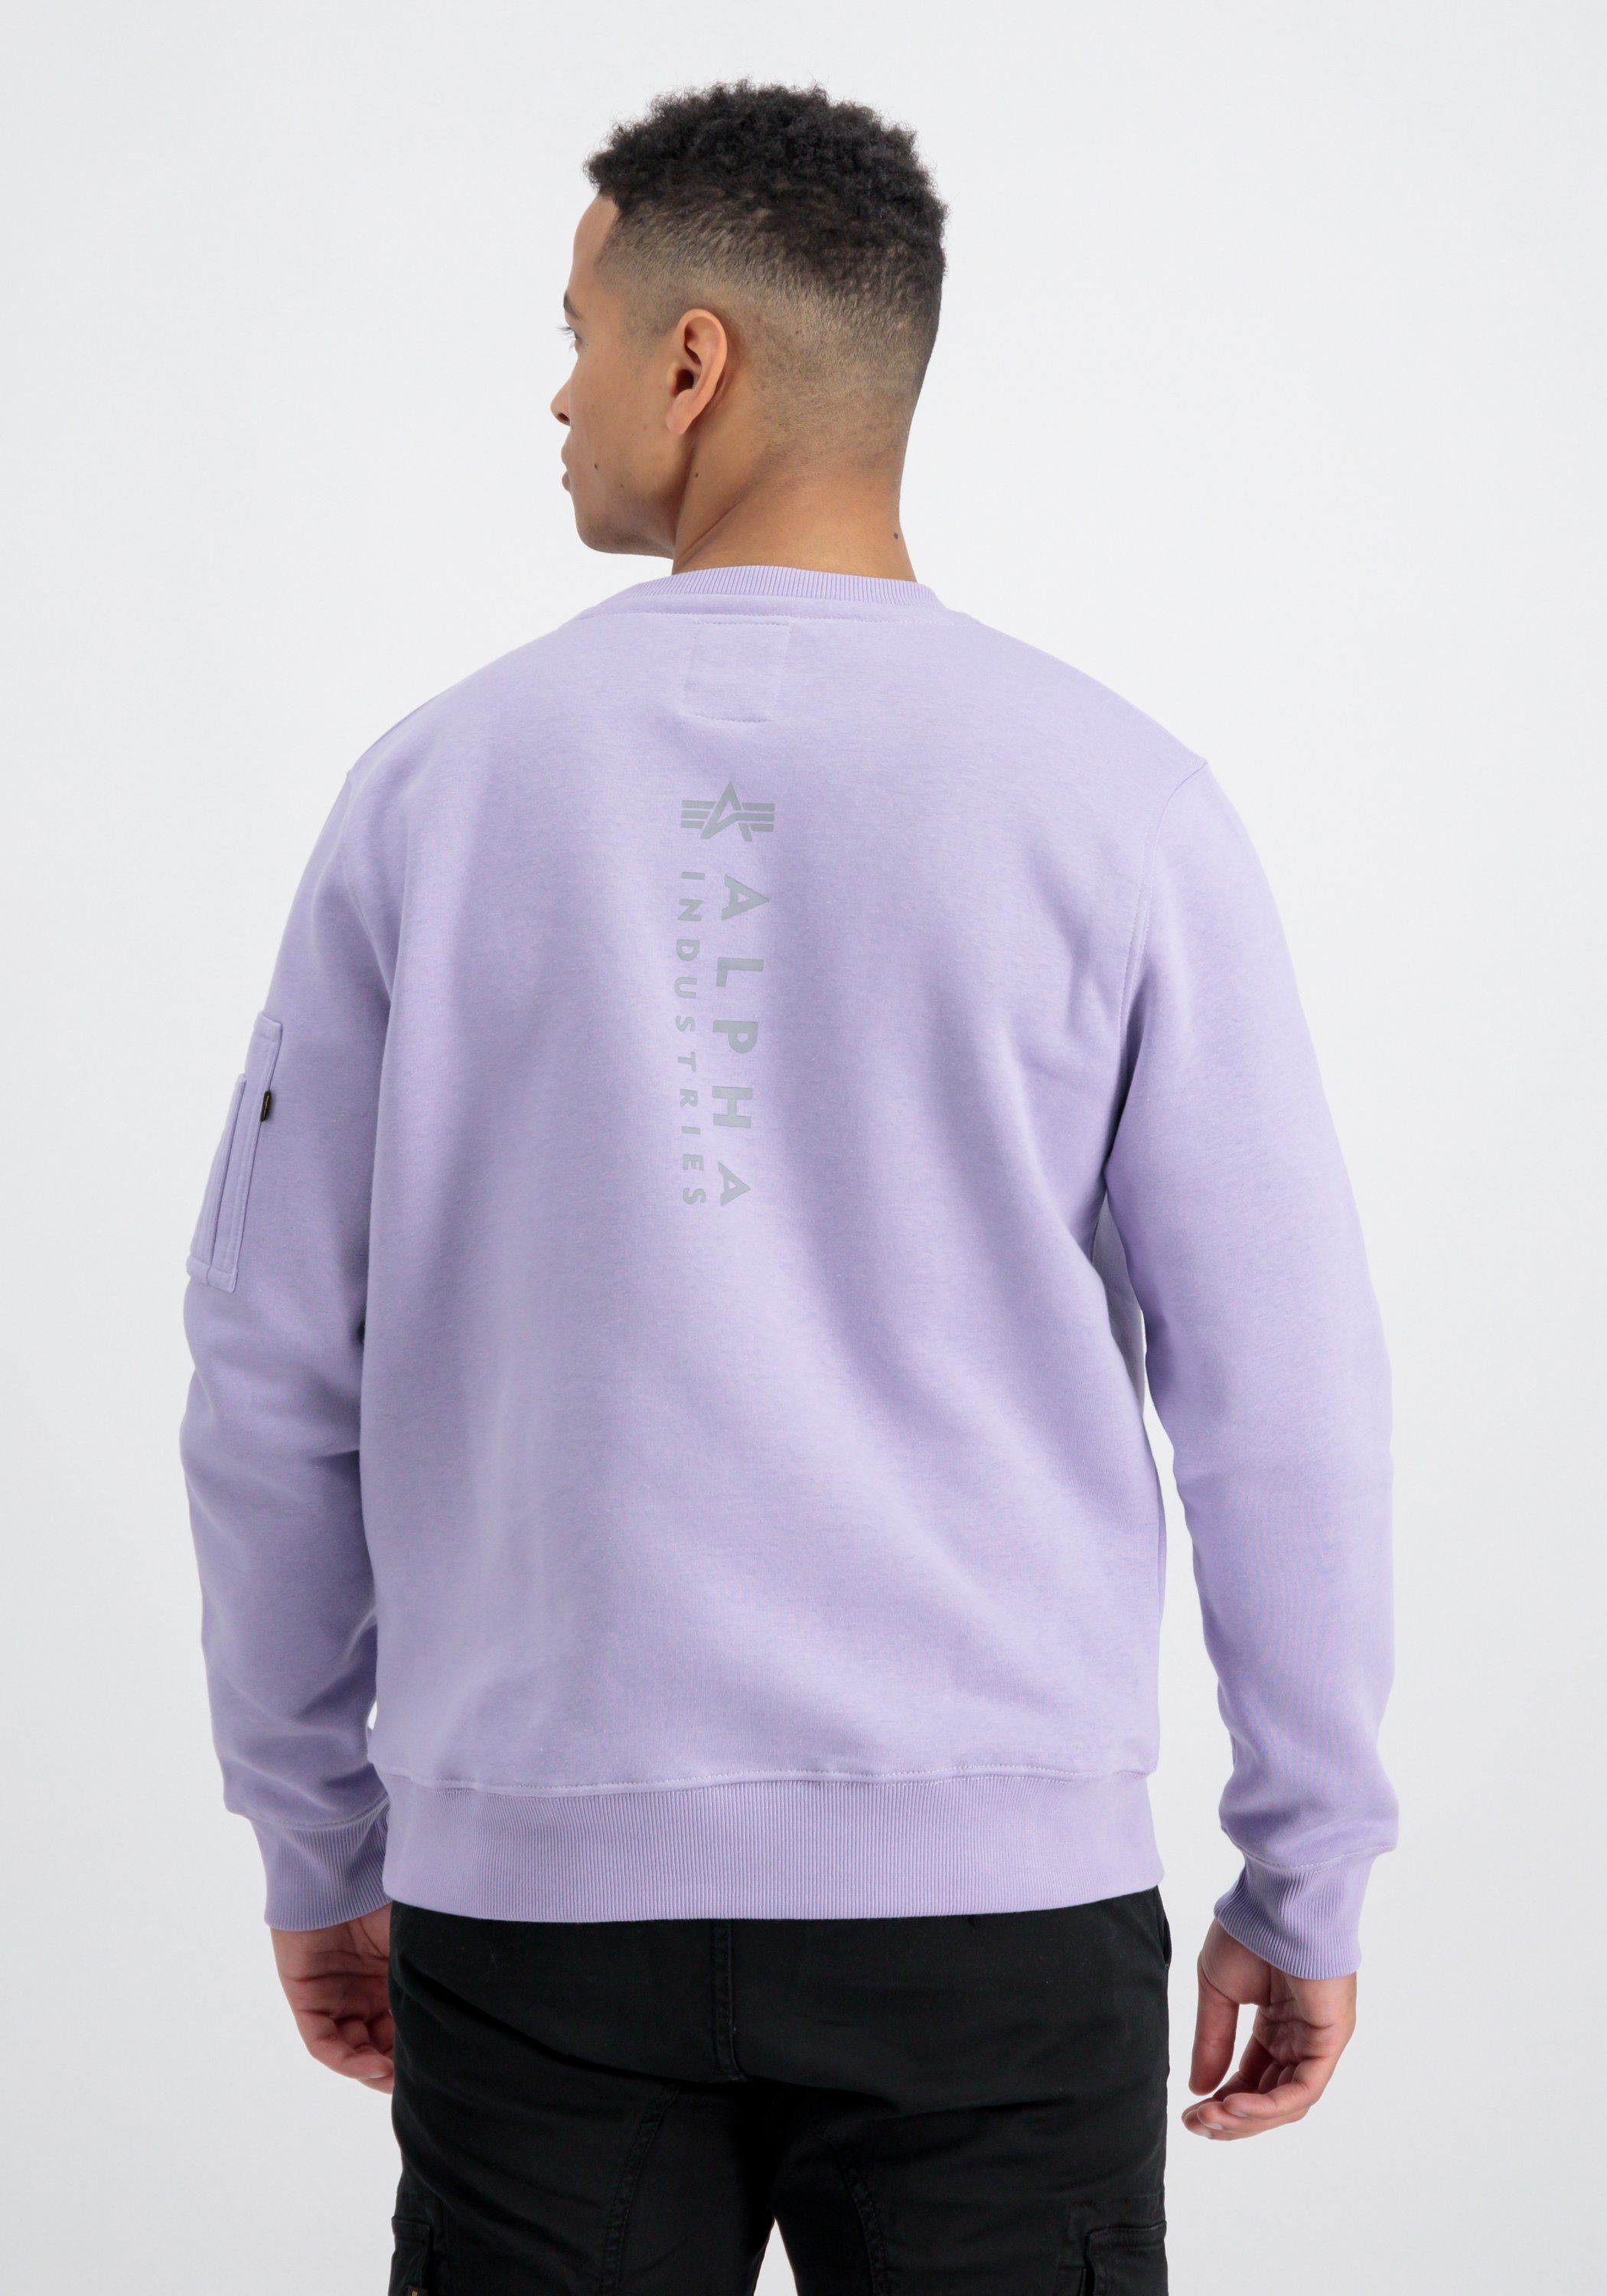 Unisex pale Sweater EMB Alpha Industries Sweater Industries violet Sweatshirts Men - Alpha